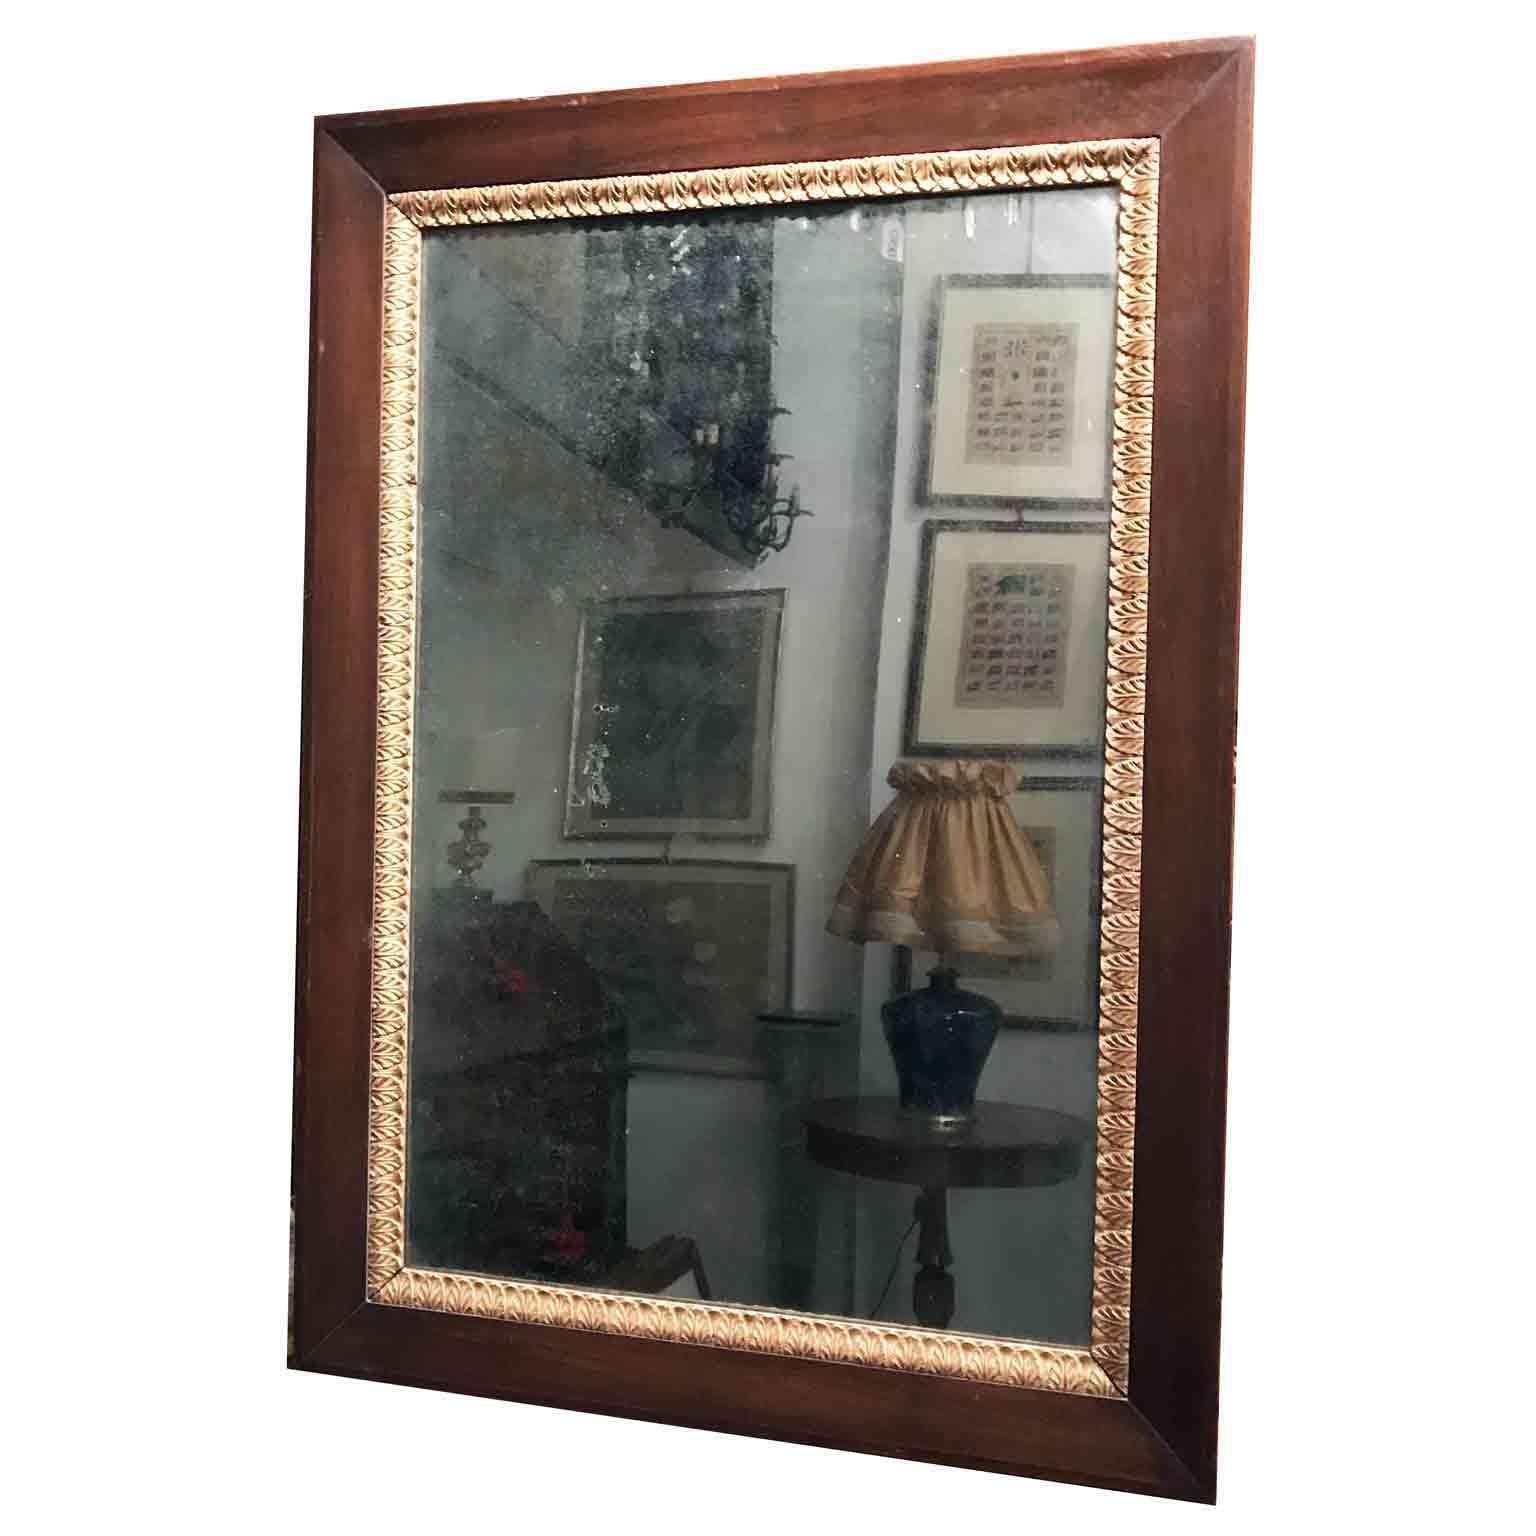 Gilt Early 19th Century French Empire Walnut Frame with Mercury Mirror